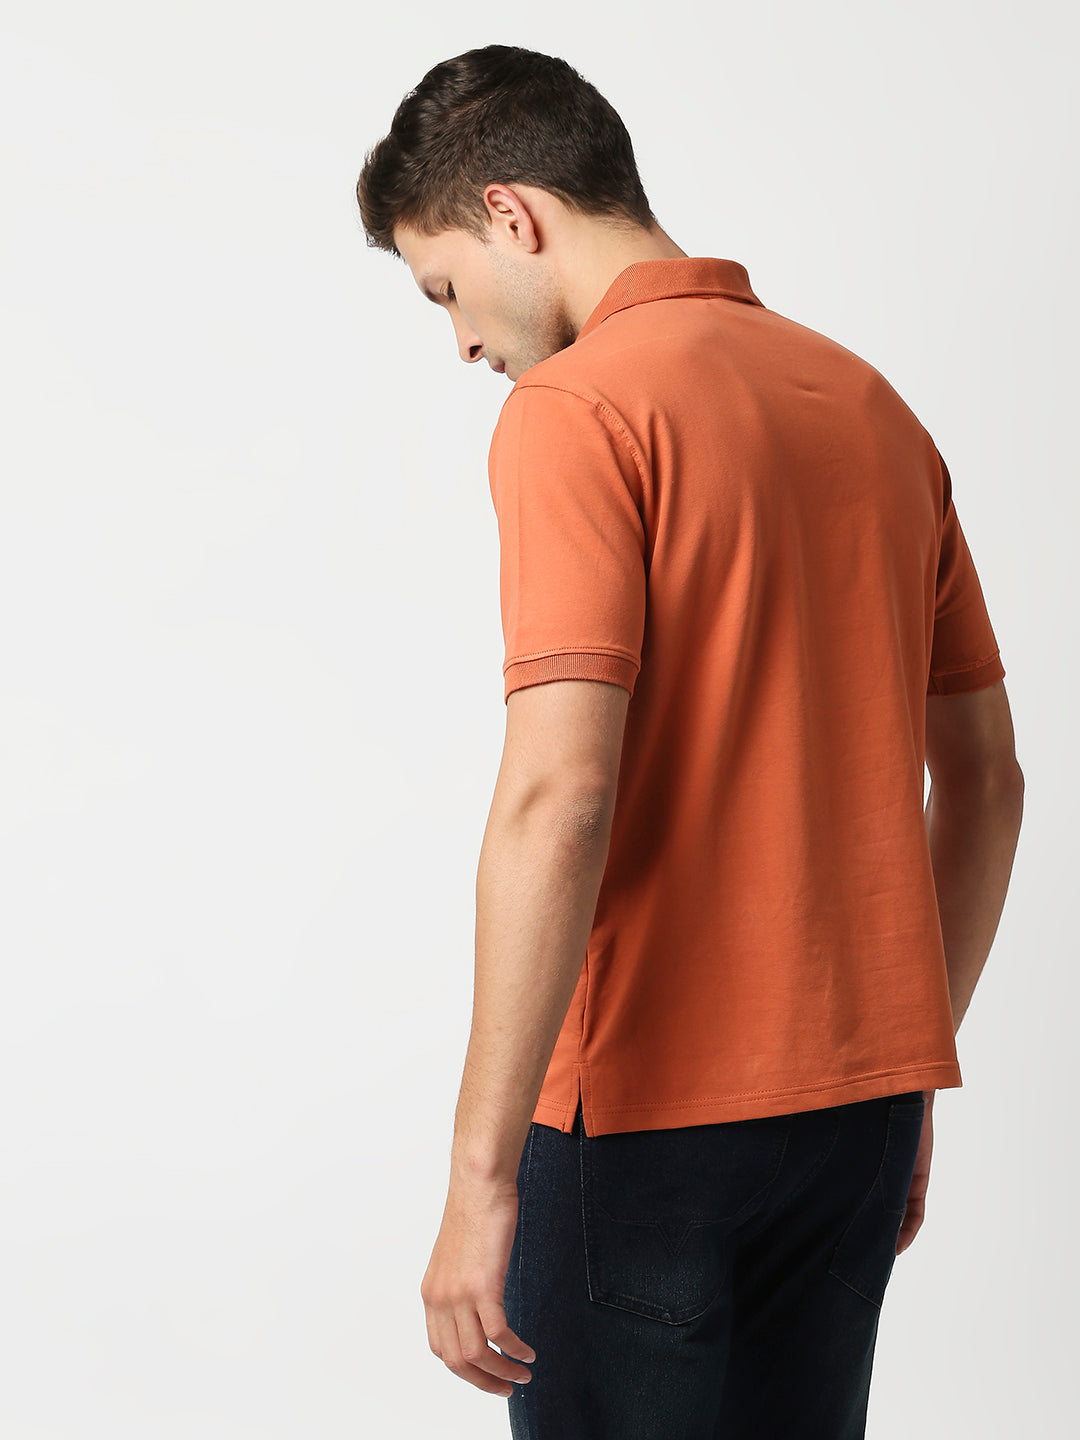 Buy Blamblack Men's Polo Plain Rust Color T shirt